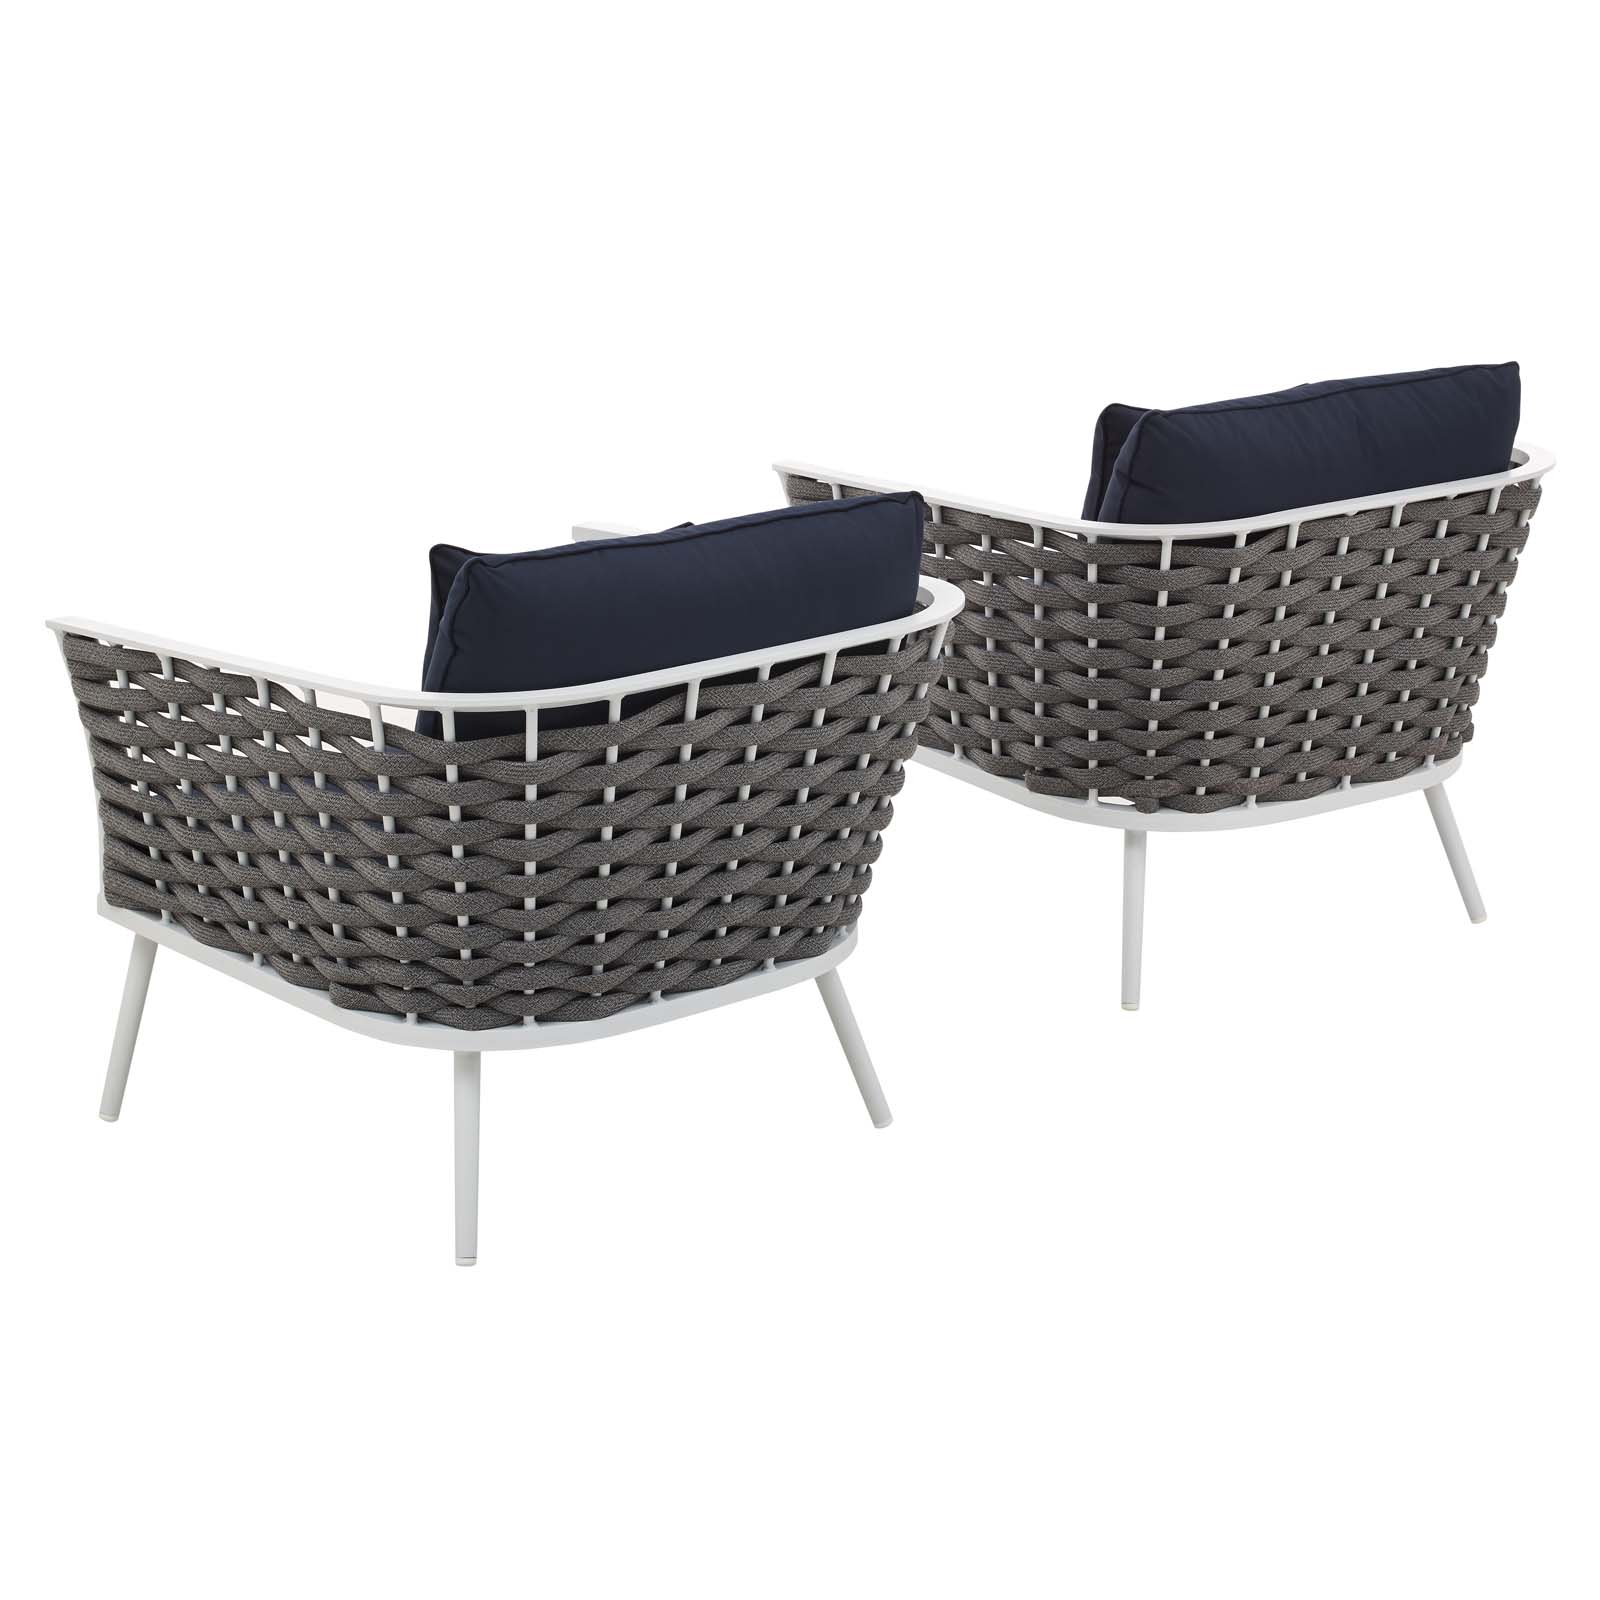 Modern Contemporary Urban Design Outdoor Patio Balcony Garden Furniture Lounge Chair Armchair, Set of Two, Fabric Aluminium, White Navy - image 3 of 6